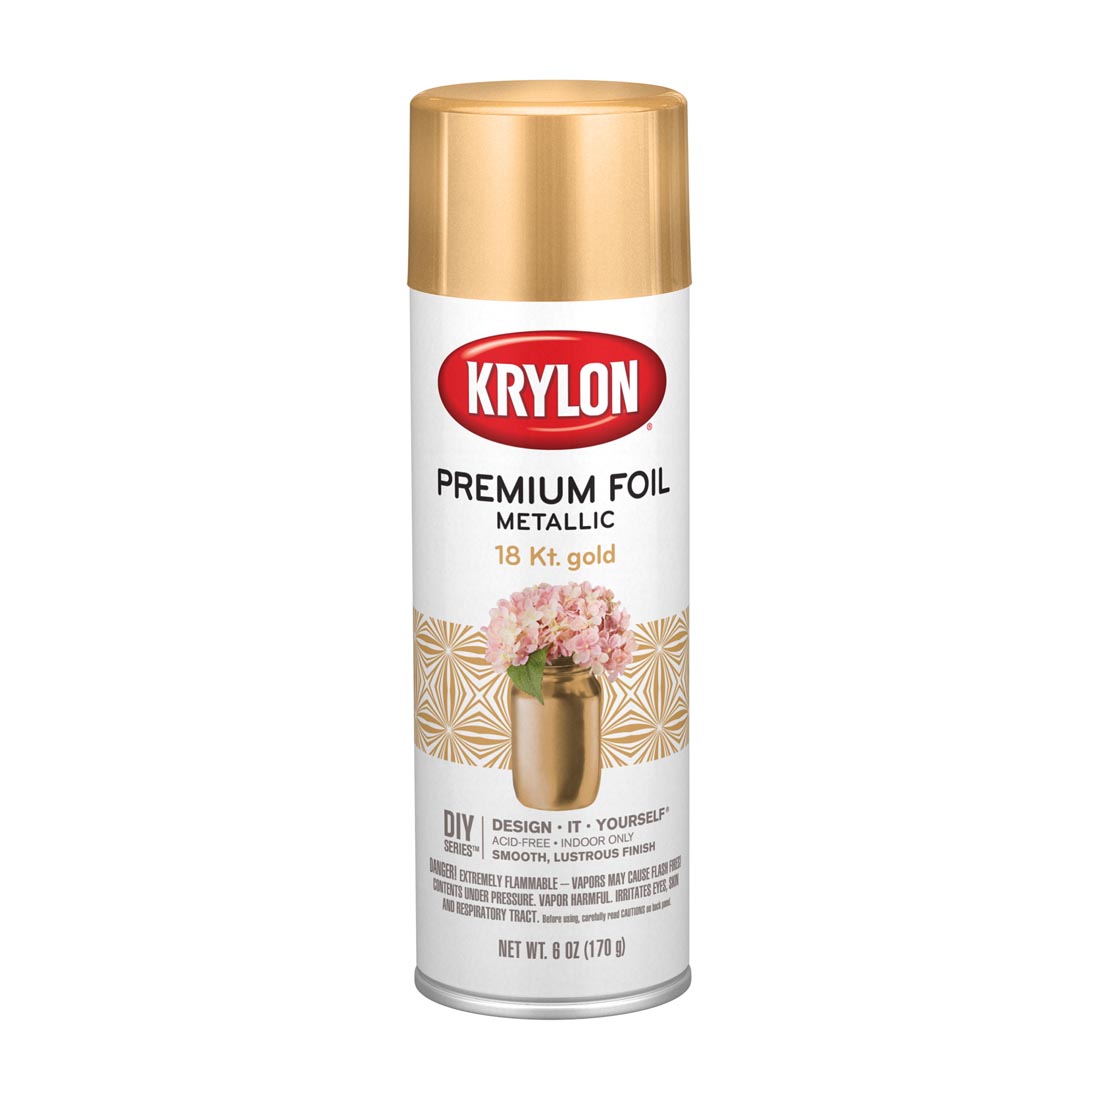 Krylon Premium Foil Metallic Gold Spray Paint